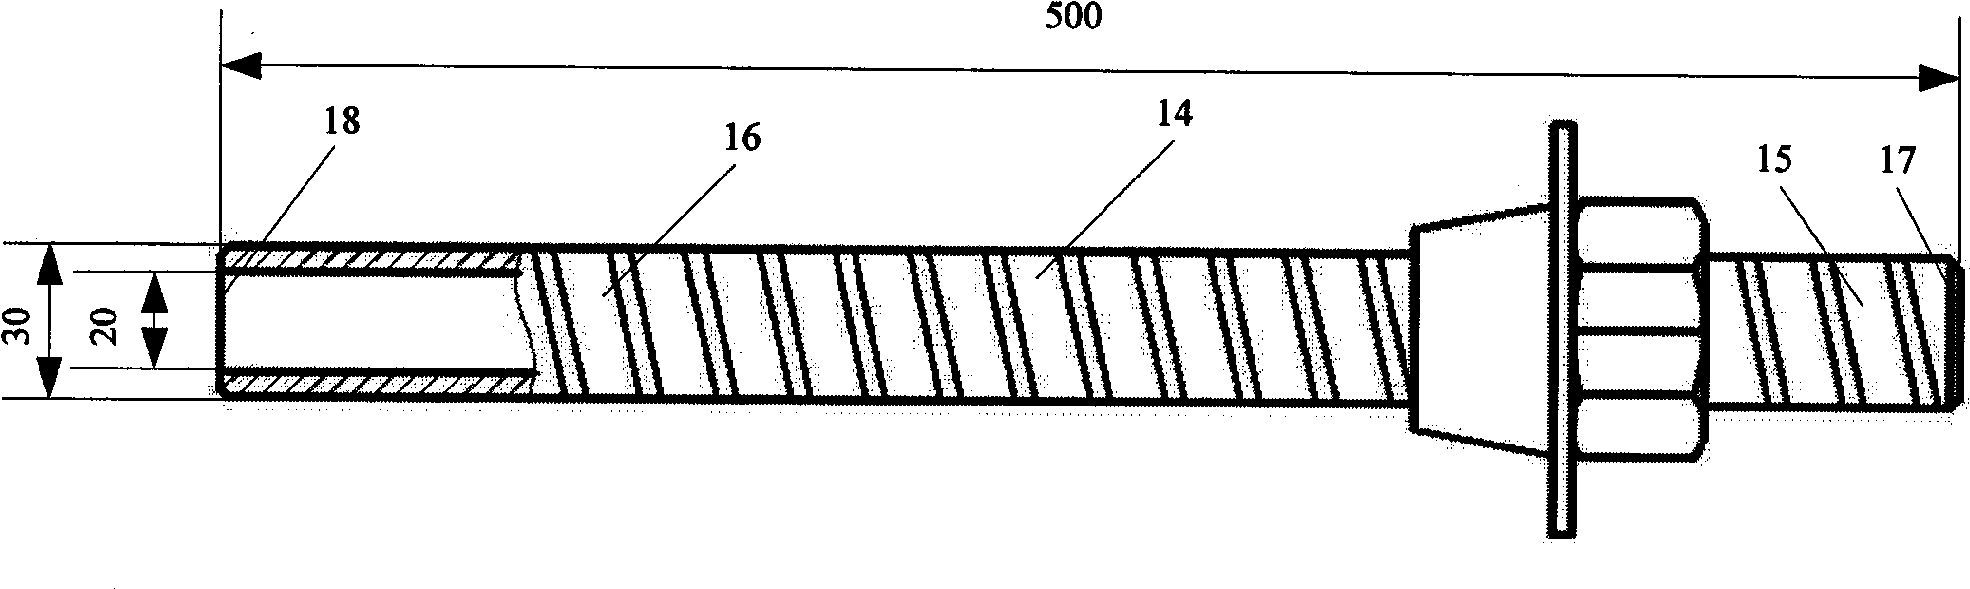 Ferromagnet magnetostrictive effect-based method for testing length of anchor rod